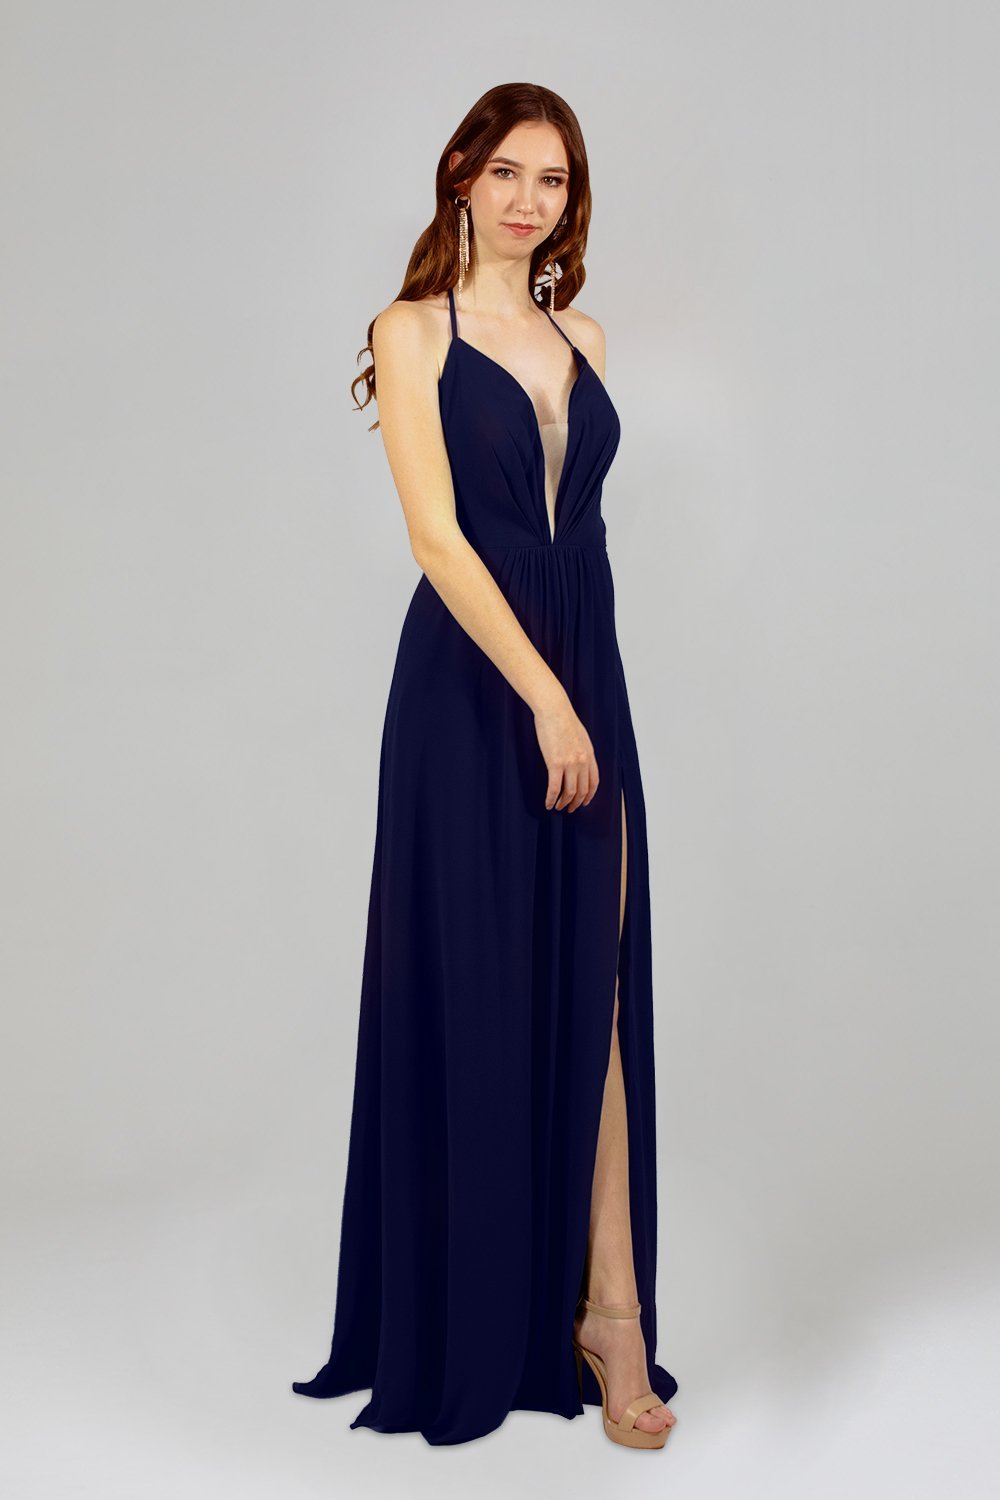 custom made navy blue bridesmaid dresses australia online envious bridal & formal